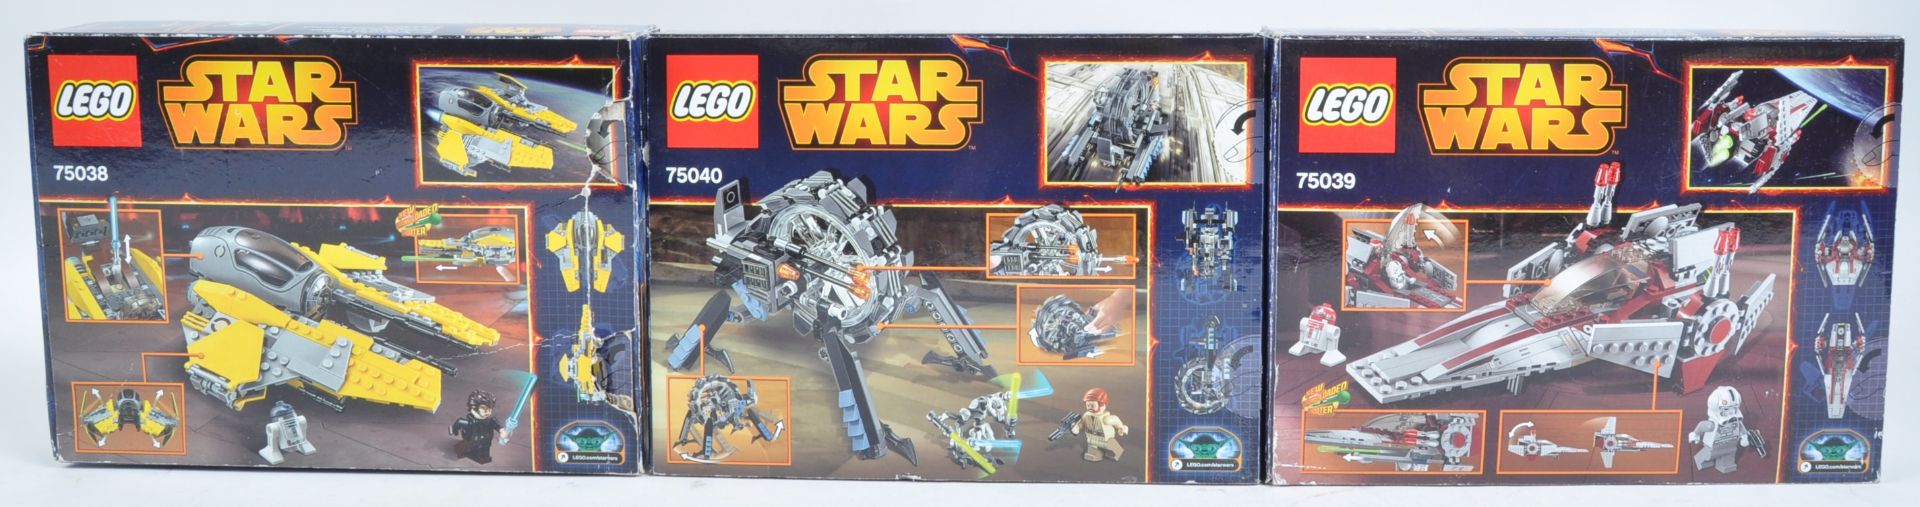 LEGO SETS - LEGO STAR WARS - 75038 / 75039 / 75040 - Image 2 of 5